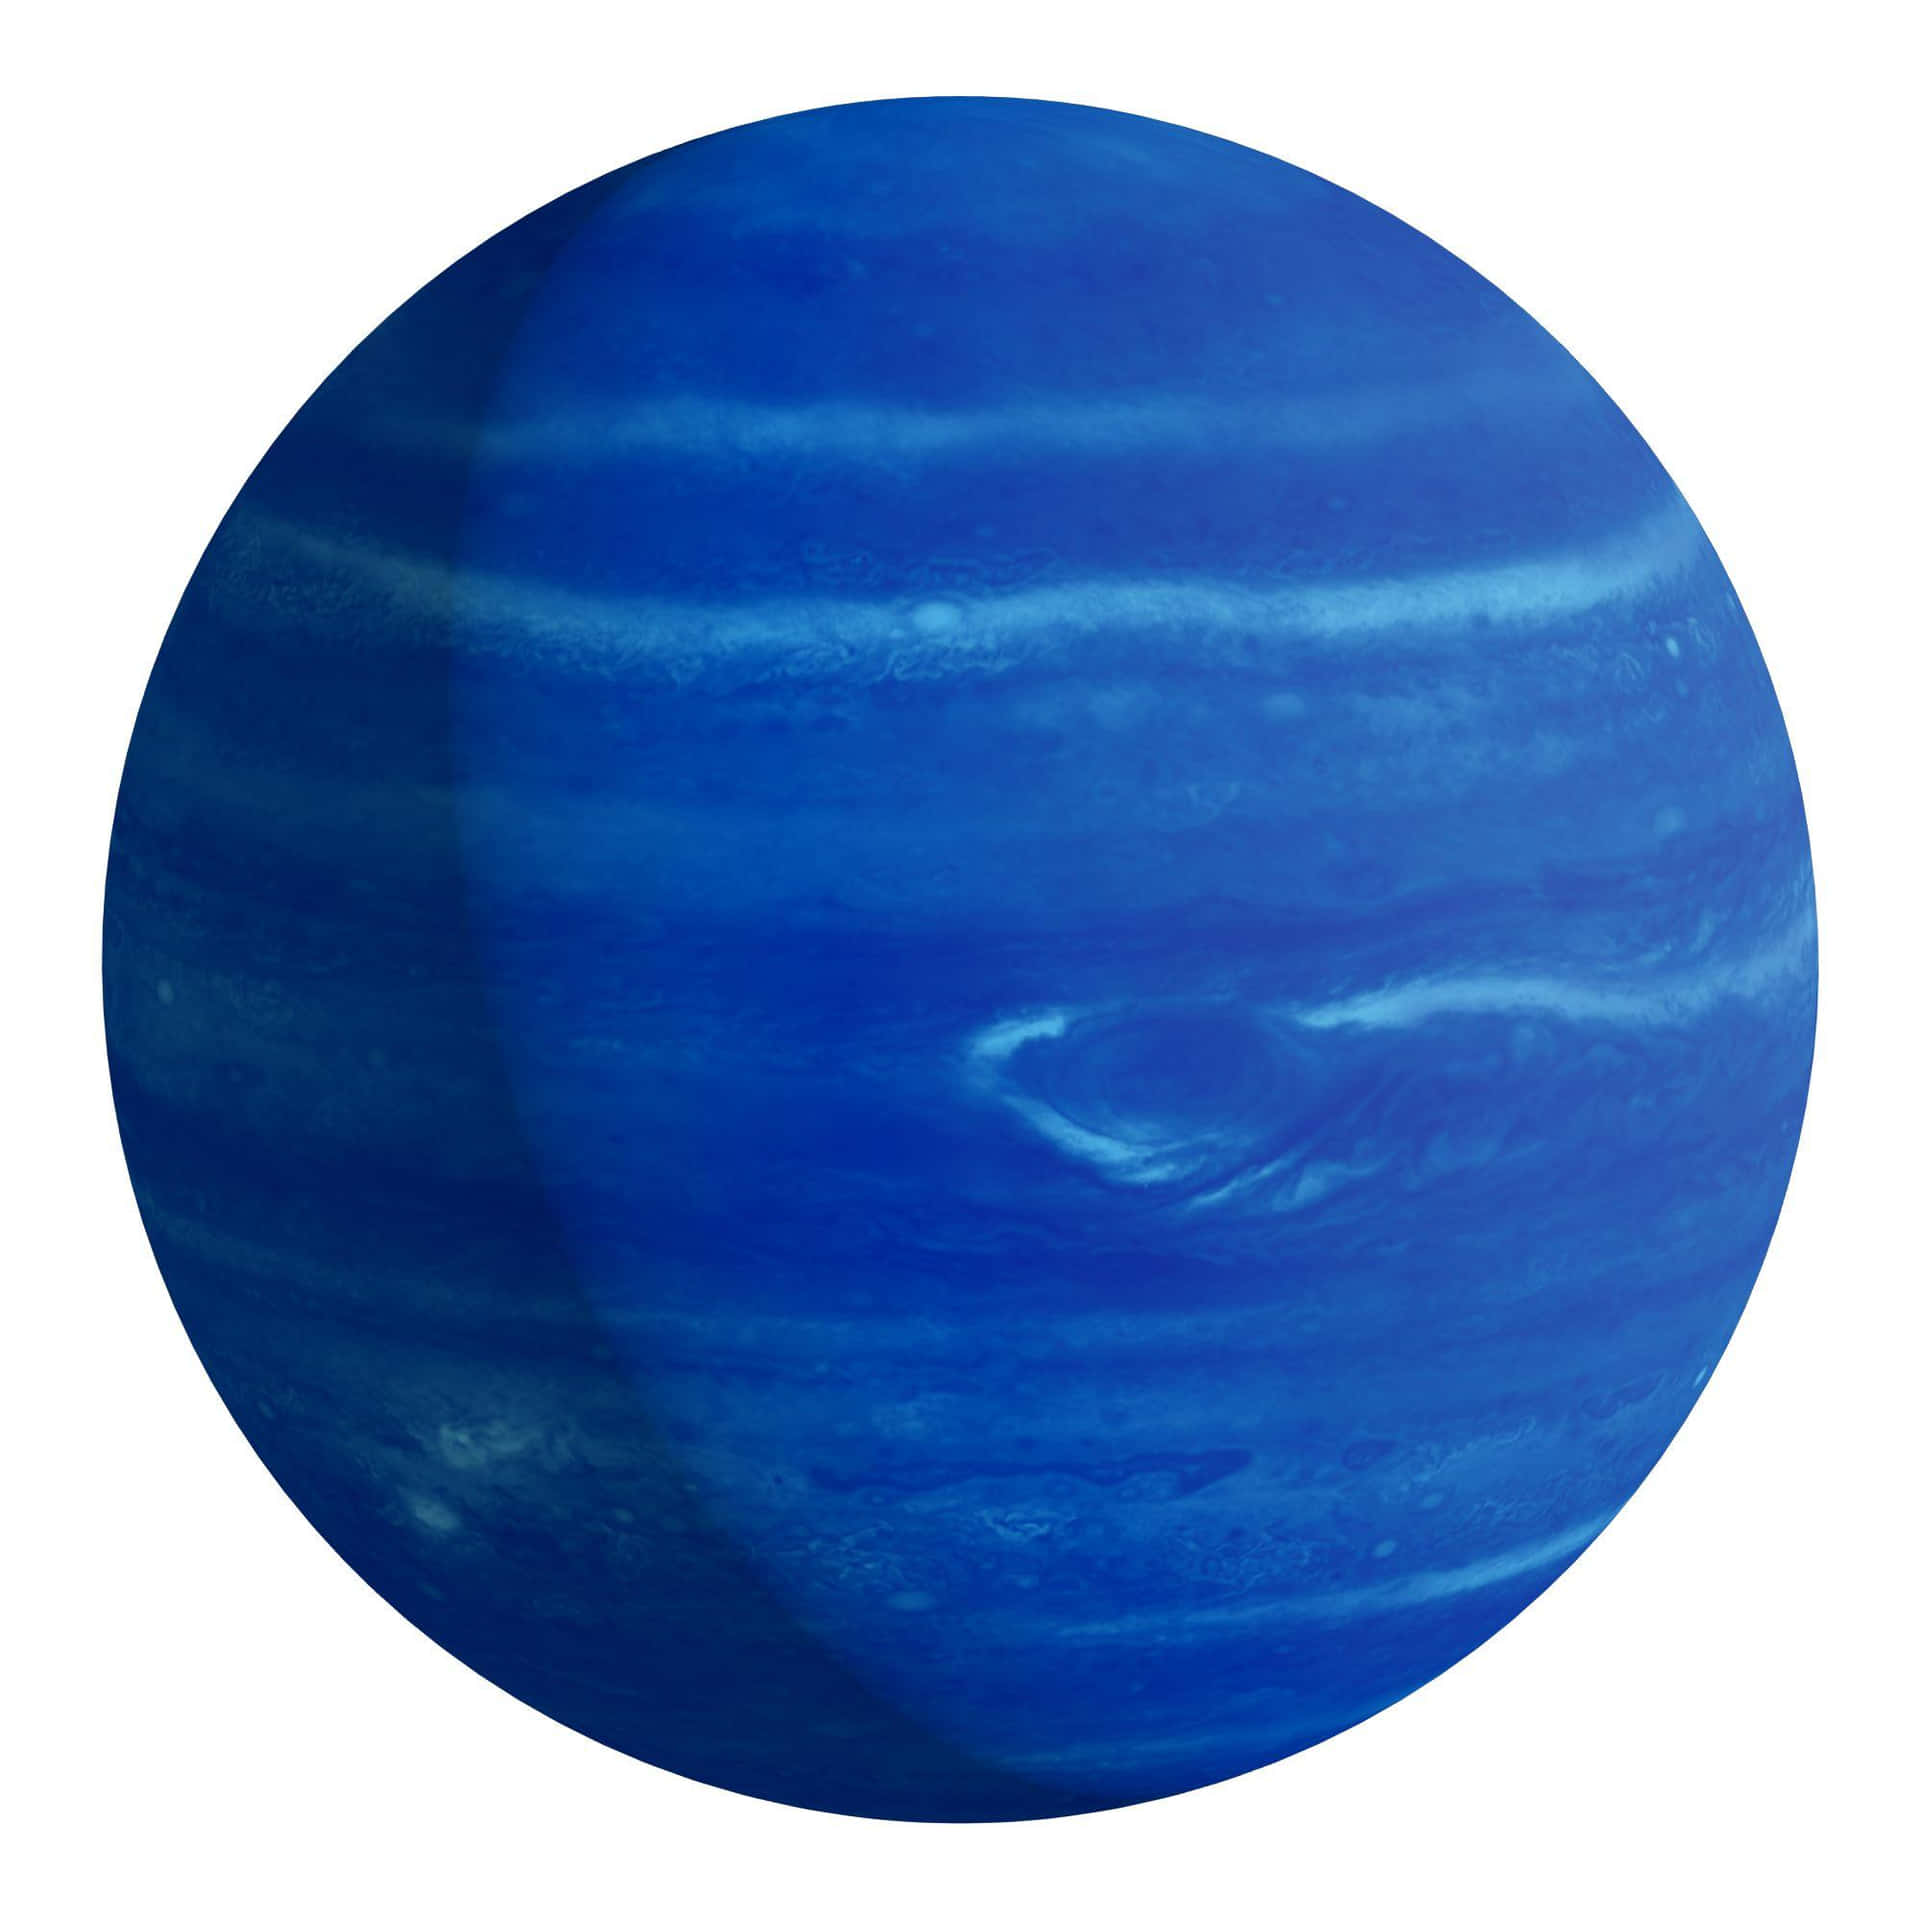 Denisiga Planeten Neptunus Ses I Denna Majestätiska Bild.